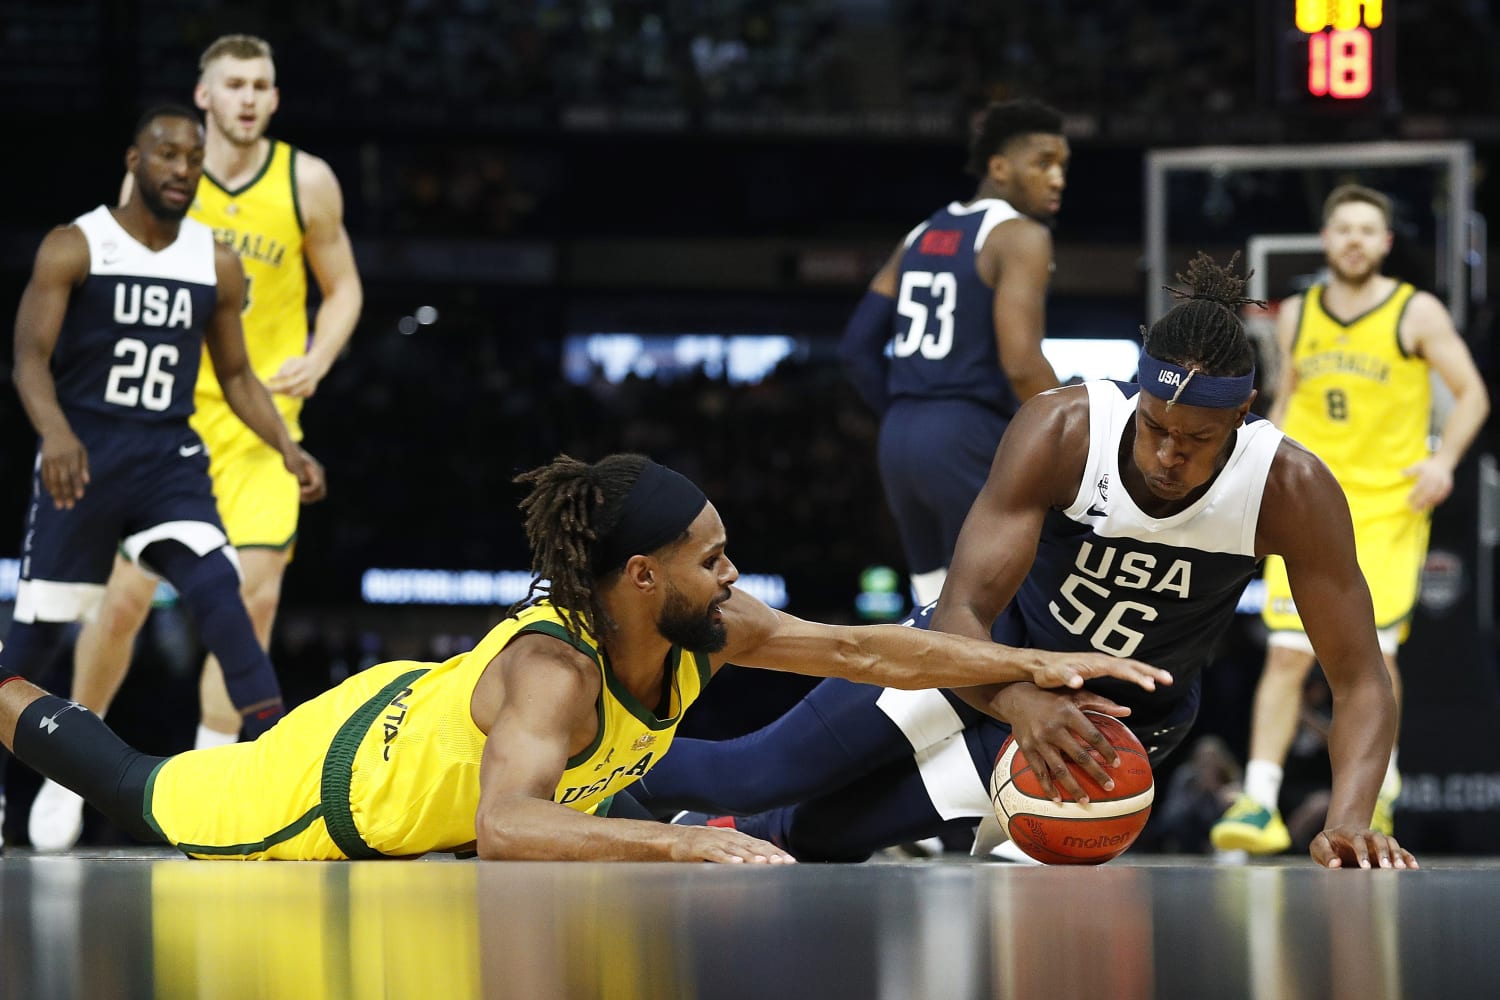 Gammel mand Havn Allergi Streak ends: U.S. men's basketball falls to Australia for first loss in 13  years